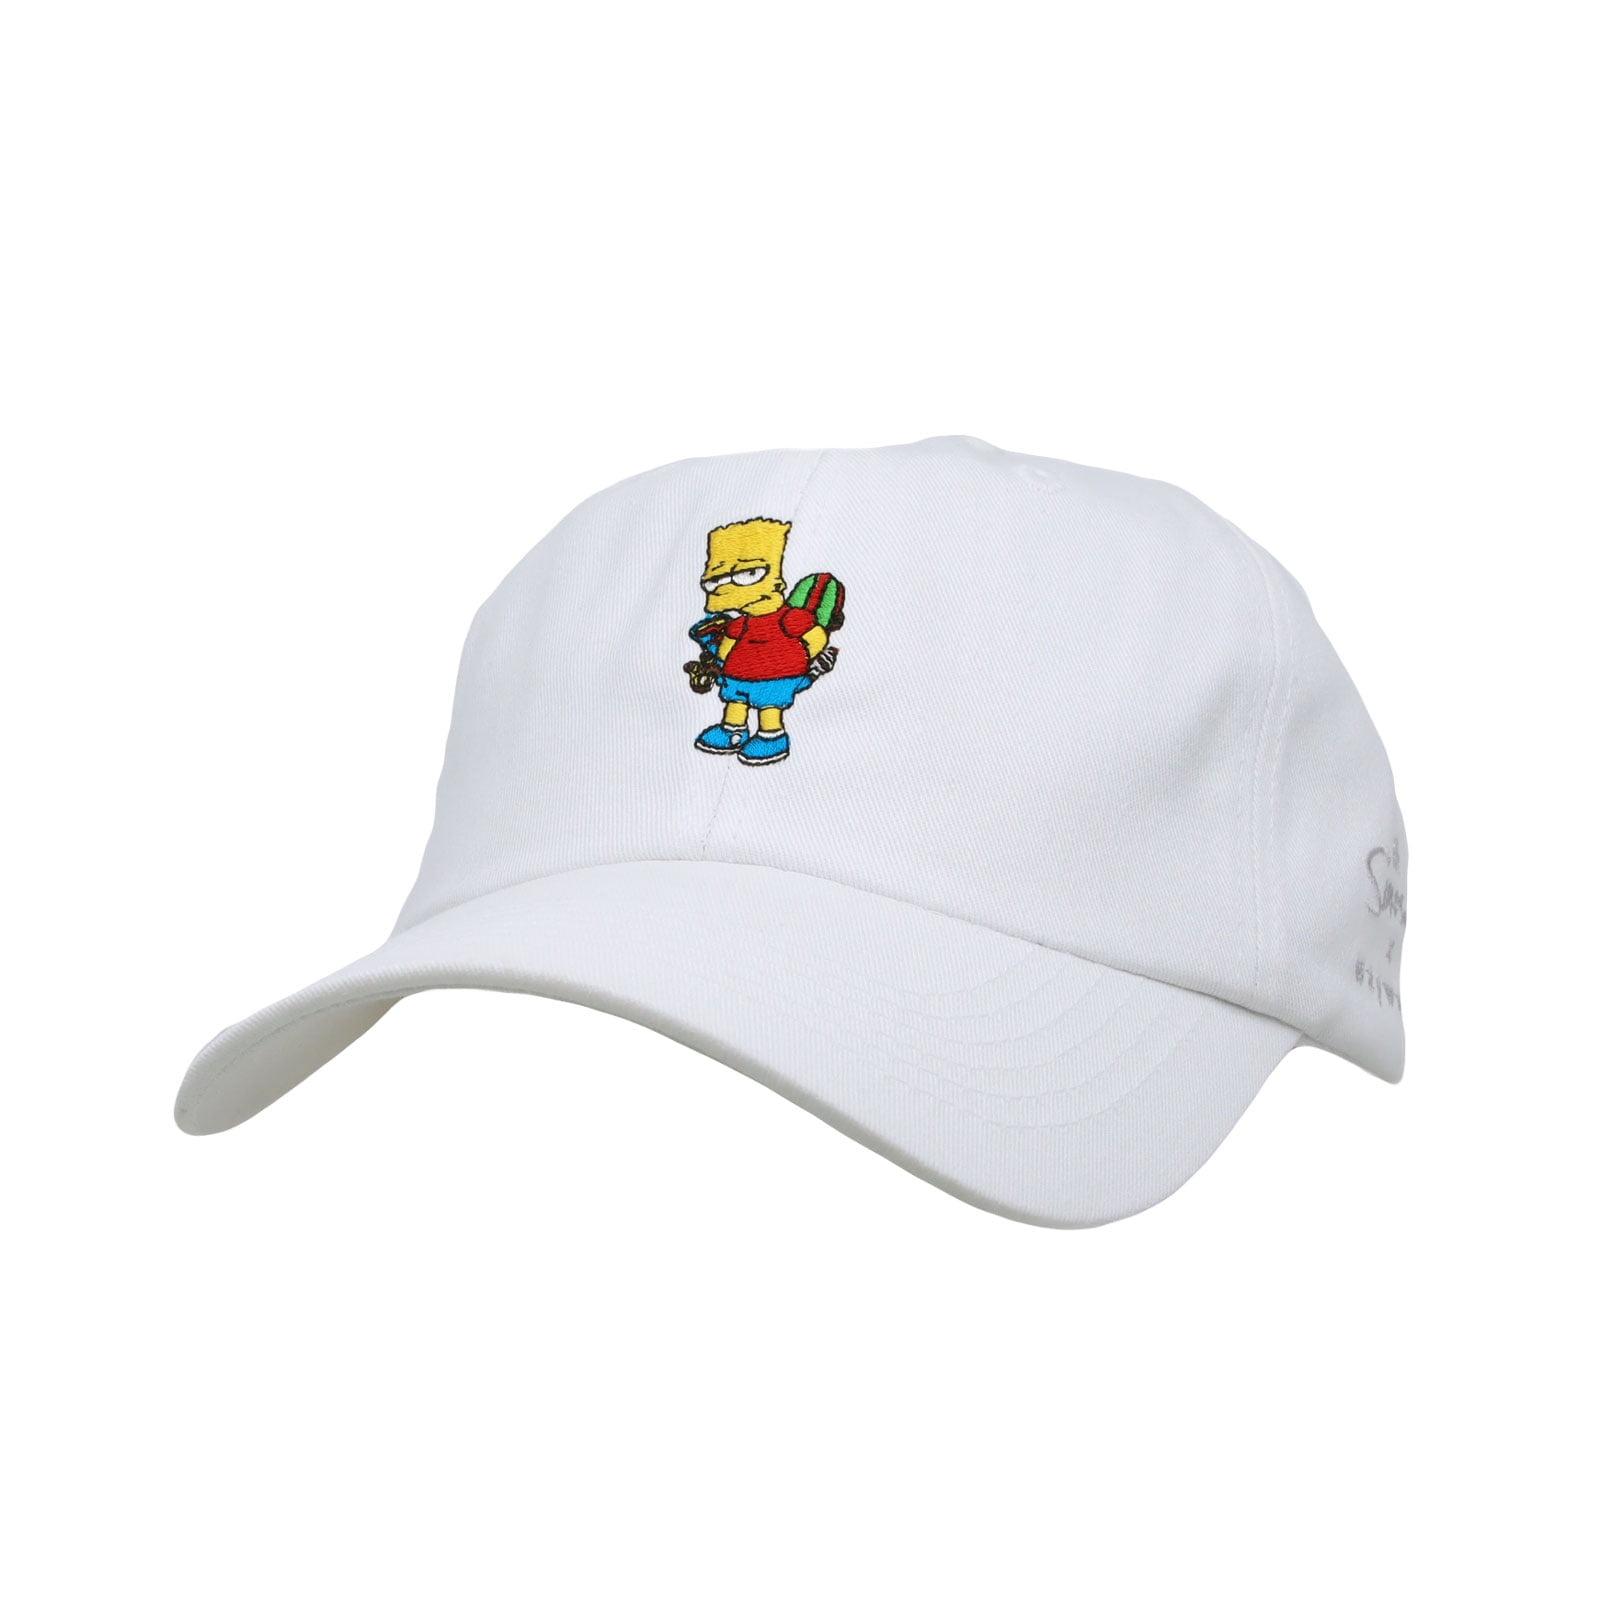 HS02.The Simpsons Bart Simpson Baseball Cap Hat Adjustable Unisex Men Women 